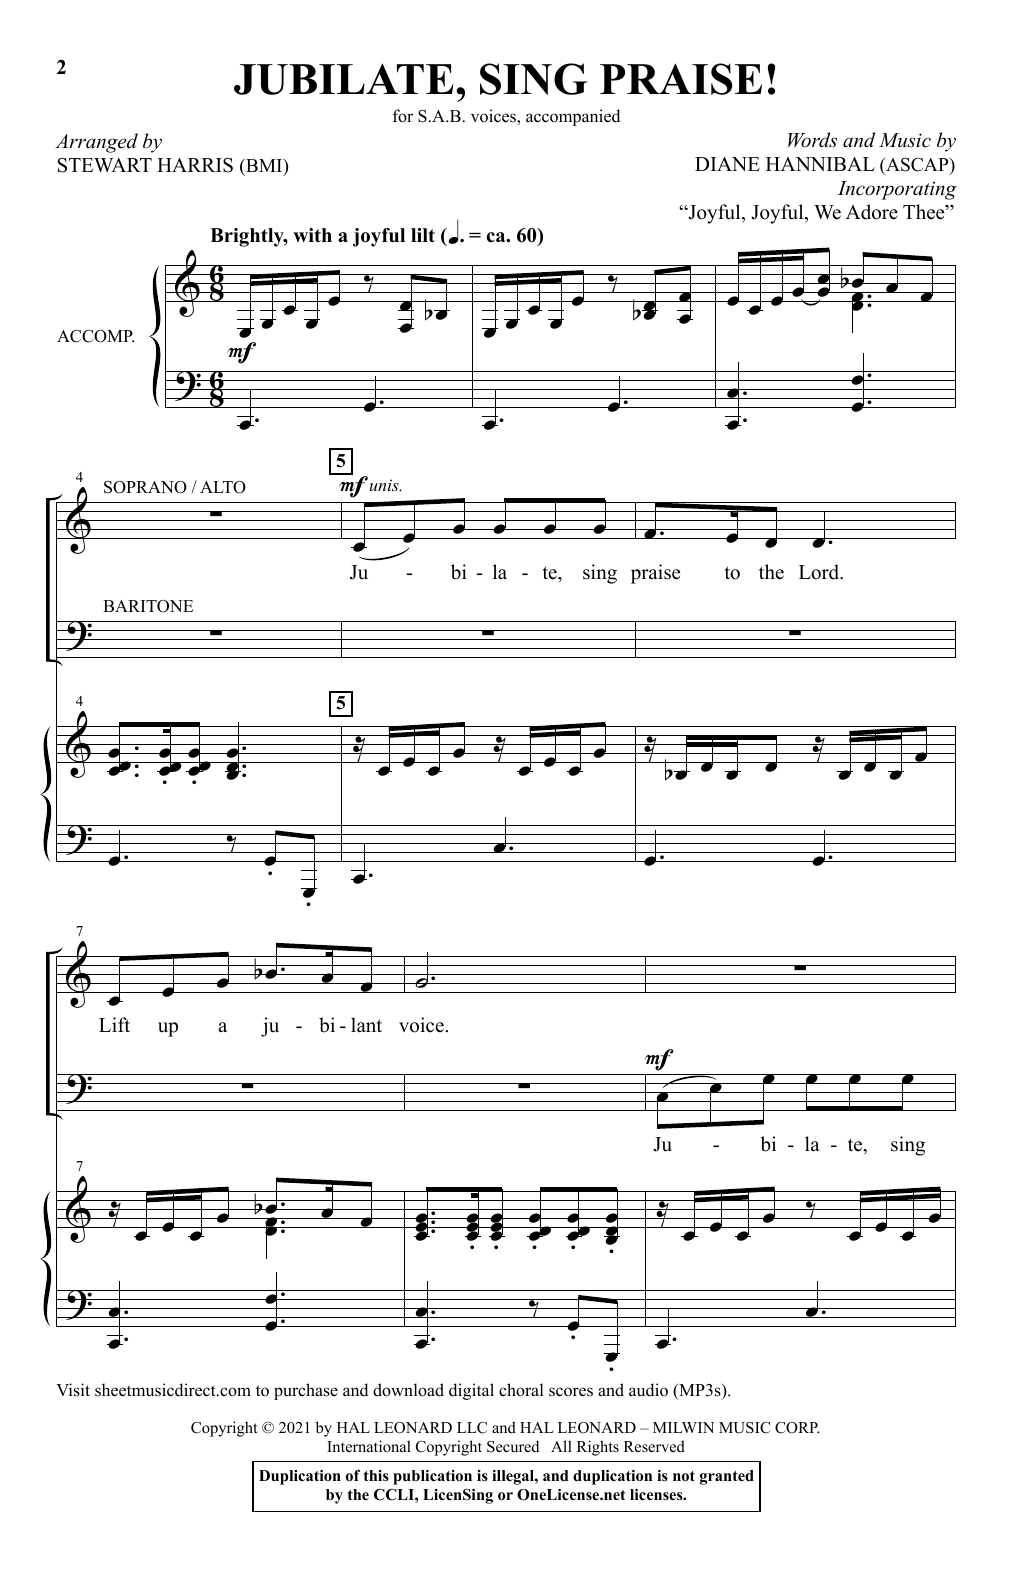 Download Diane Hannibal Jubilate, Sing Praise! (arr. Stewart Harris) Sheet Music and learn how to play SAB Choir PDF digital score in minutes